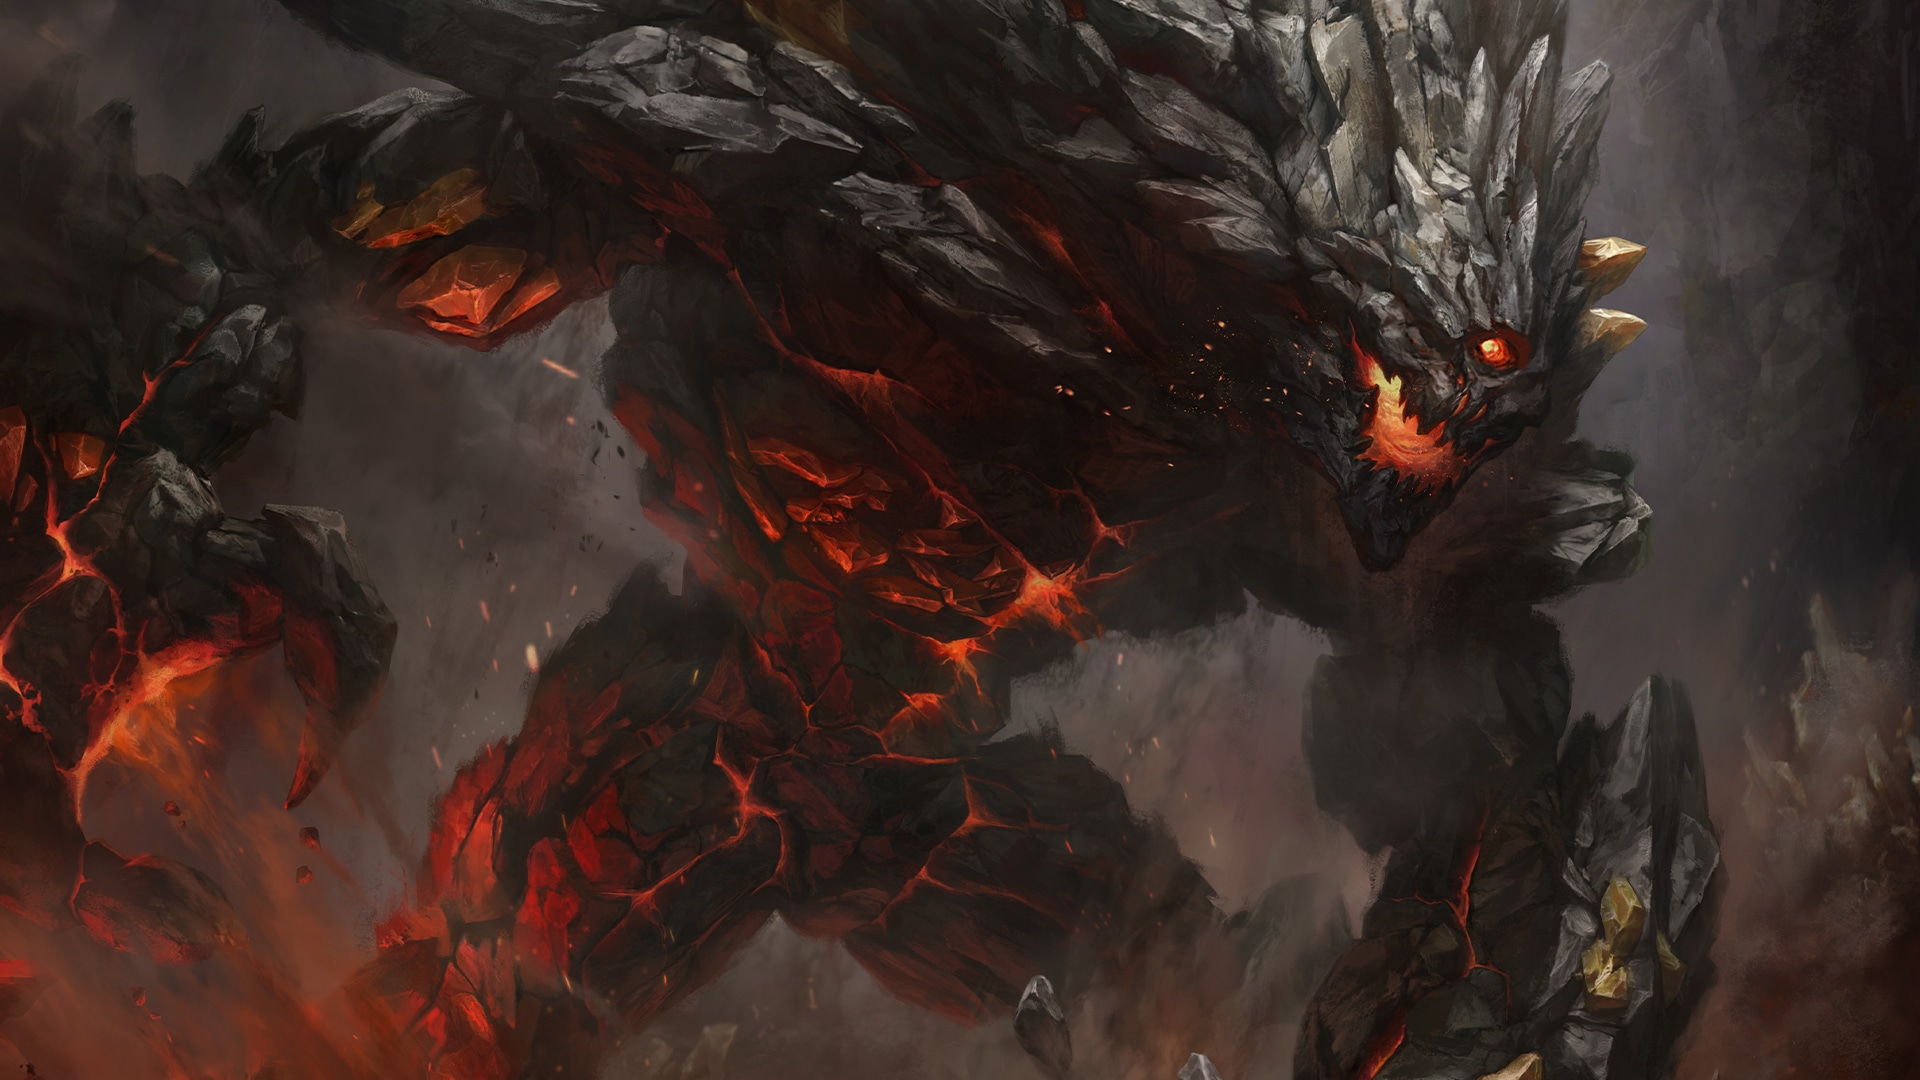 Steel Yourself in the Face of Destruction's Wake — Diablo Immortal